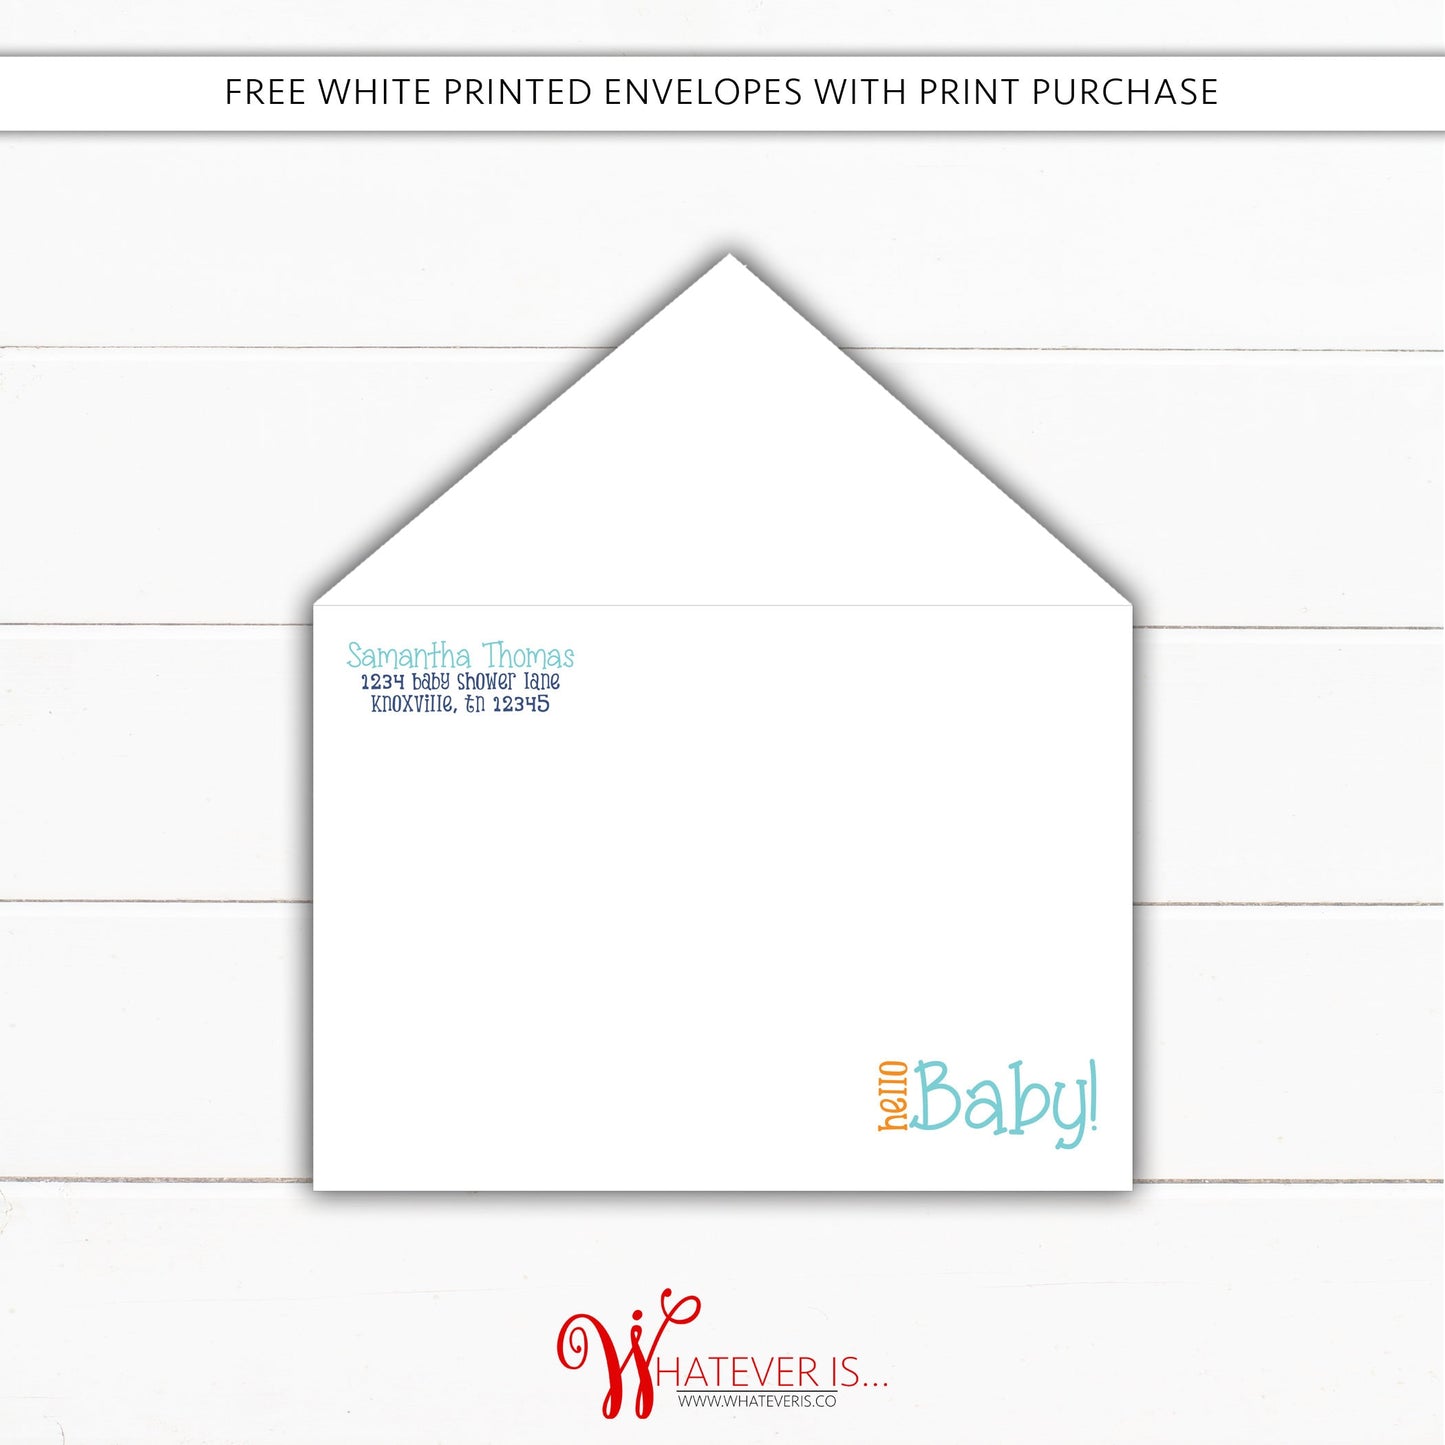 Hello Baby Quilt Baby Shower Invitation | Boy Baby Shower Invitation | It's A Boy | Printable Baby Shower | Navy | Orange | Turquoise | DIY